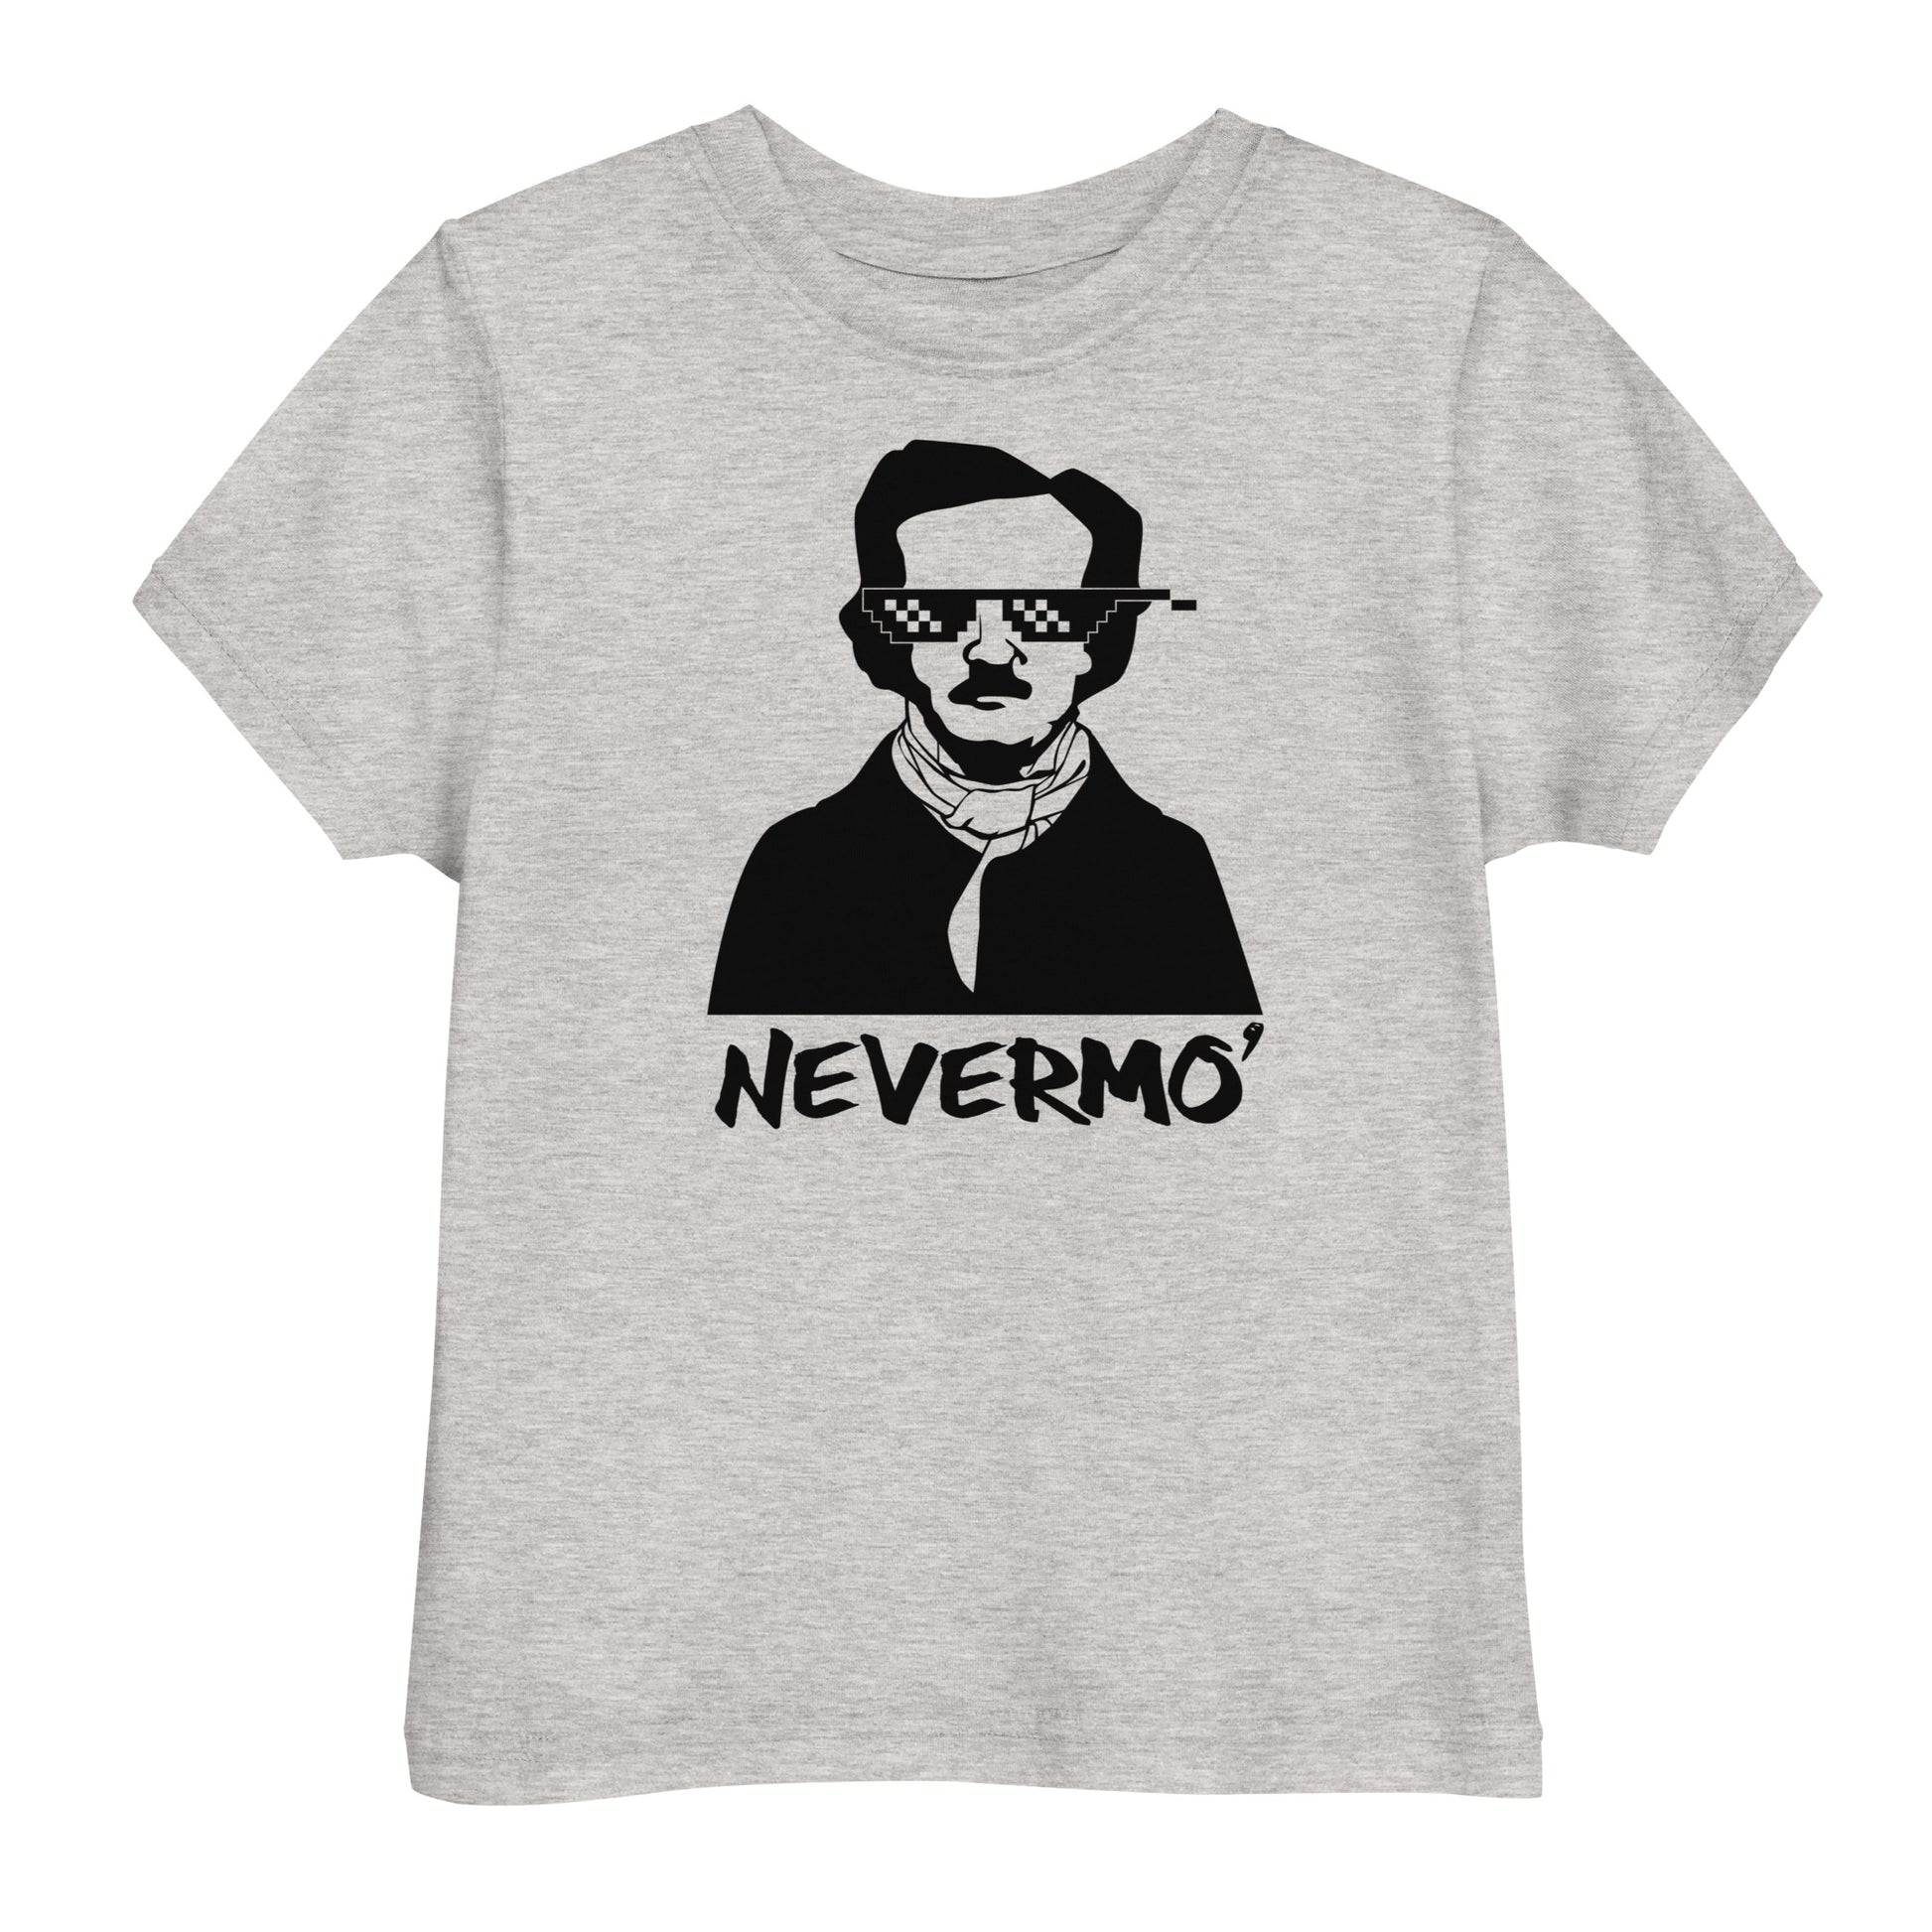 Toddler Edgar Allan Poe "Nevermo" jersey t-shirt - Heather Front